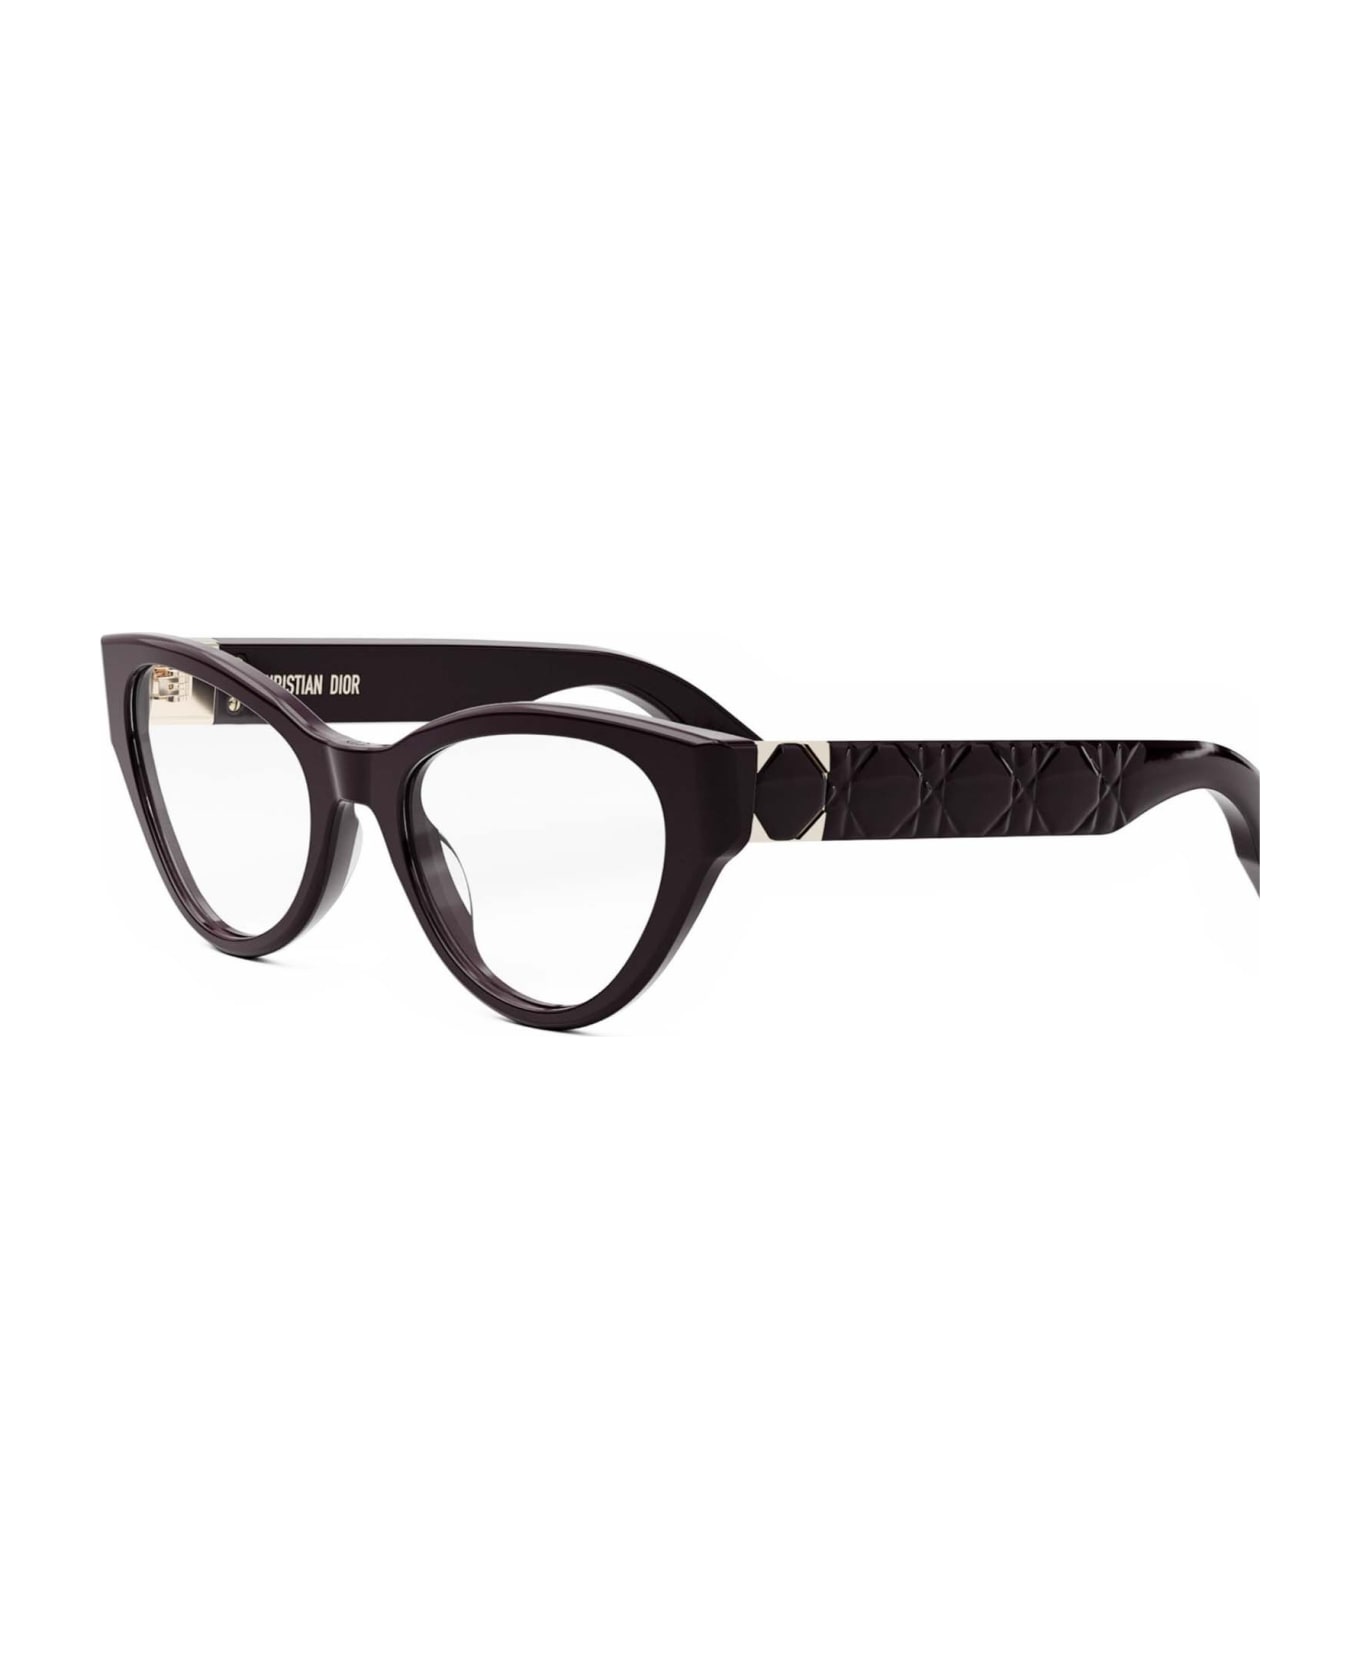 Dior Eyewear Glasses - Bordeaux